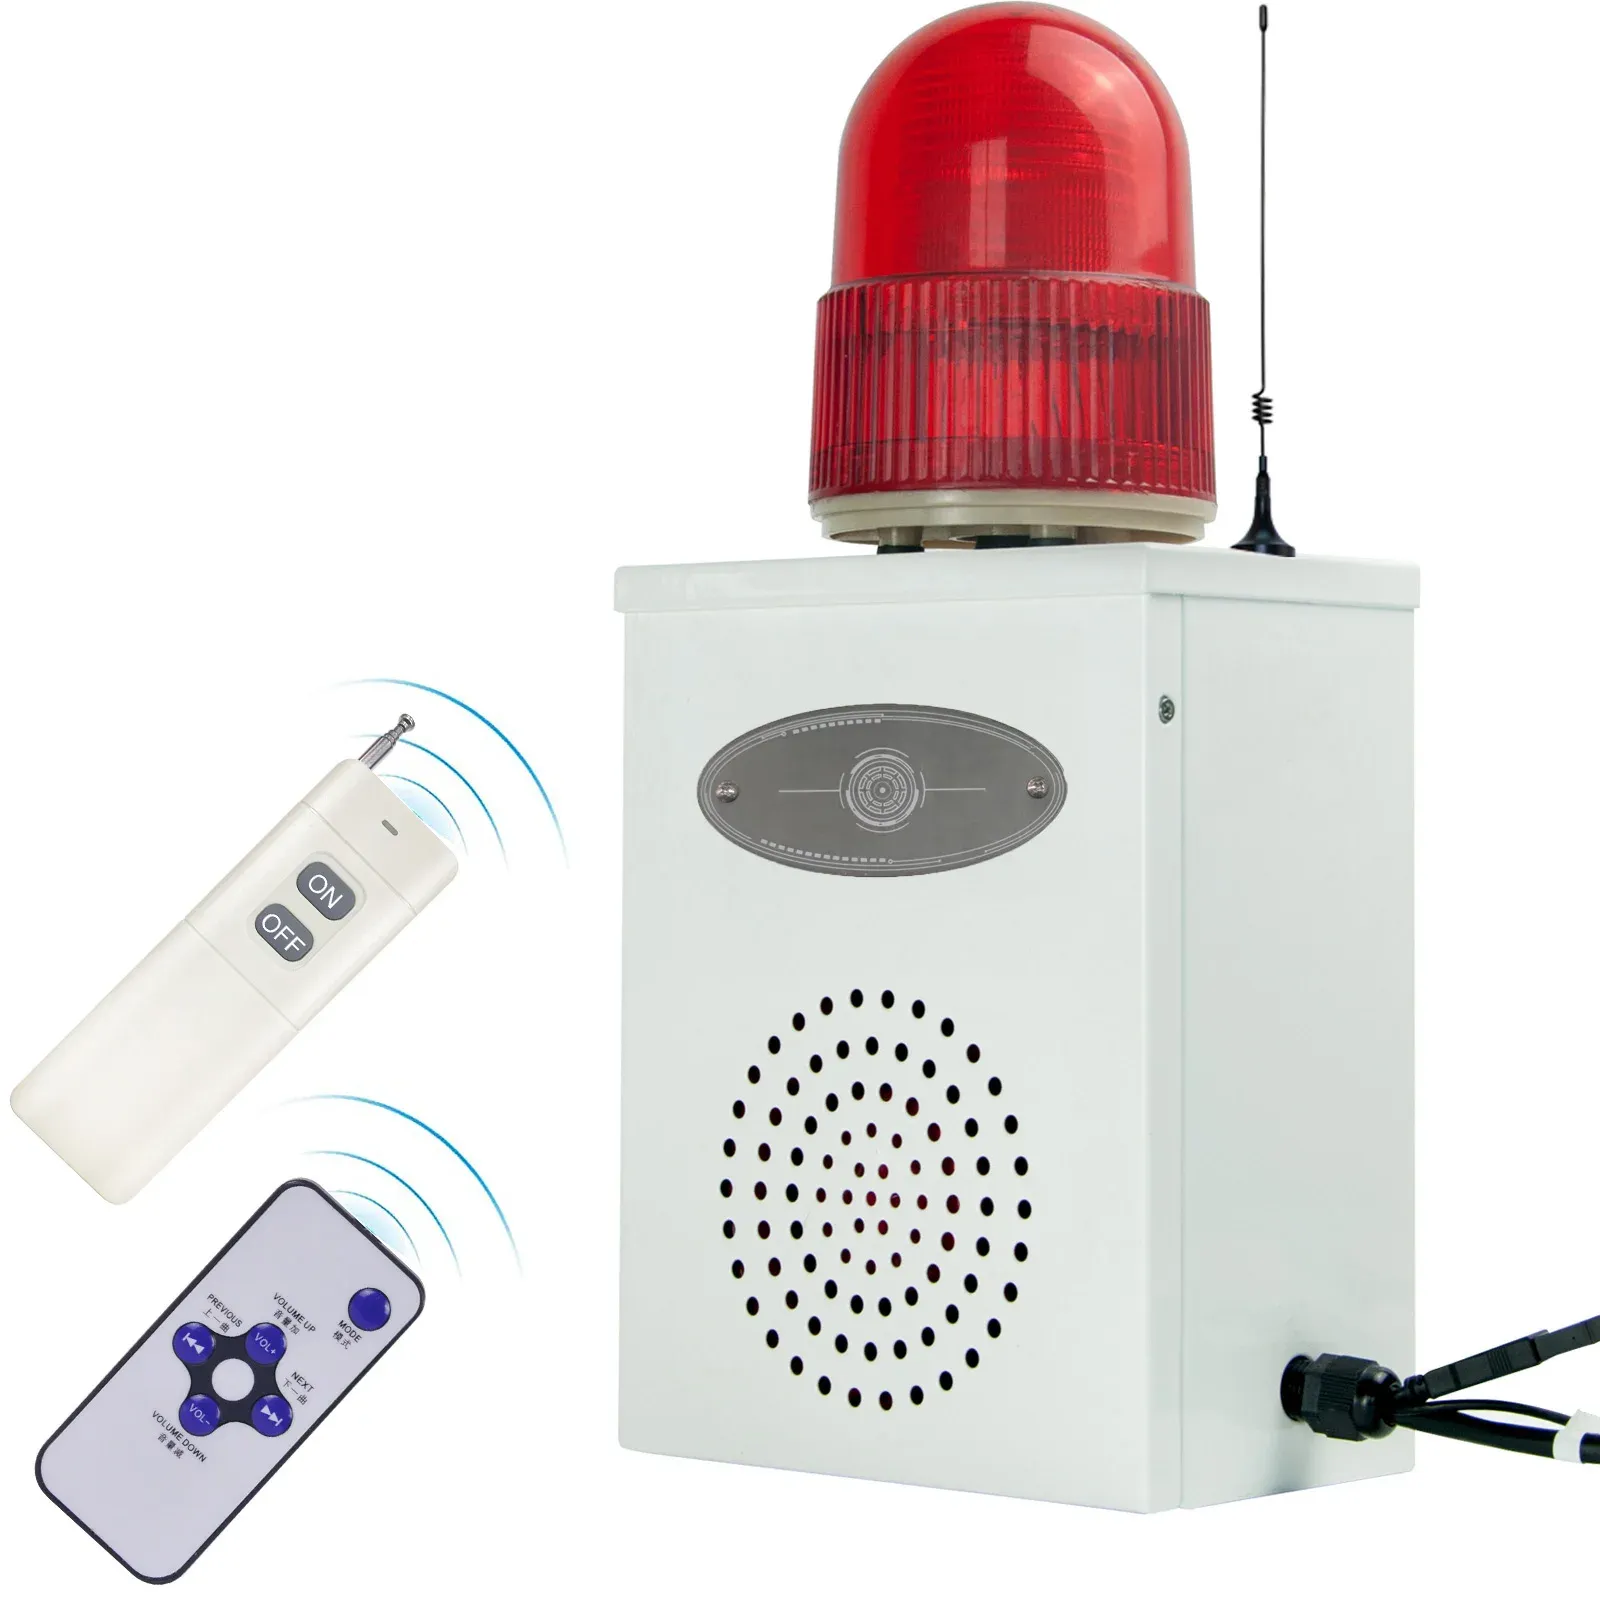 Siren Wireless Remote Control 2000m 120dB Horn Adjustable Volume Industrial Alarm Siren flashing Light Outdoor Security Siren HXB02